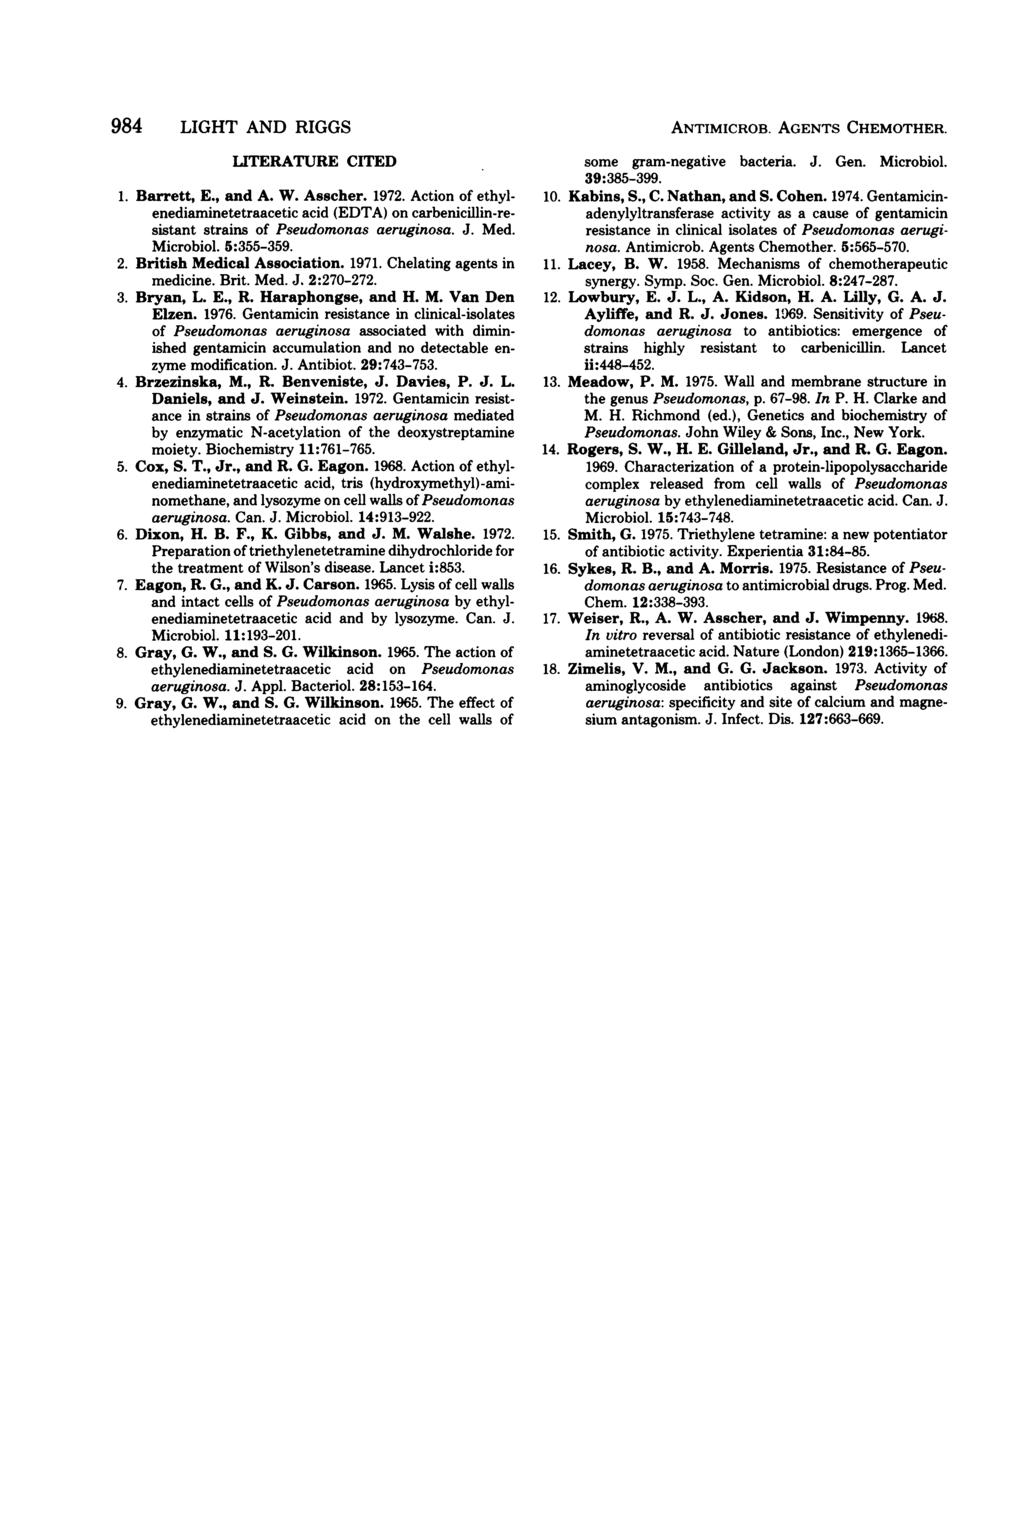 984 LIGHT AND RIGGS LITERATURE CITED 1. Barrett, E., and A. W. Asscher. 1972. Action of ethylenediaminetetraacetic acid (EDTA) on carbenicillin-resistant strains of Pseudomonas aeruginosa. J. Med.